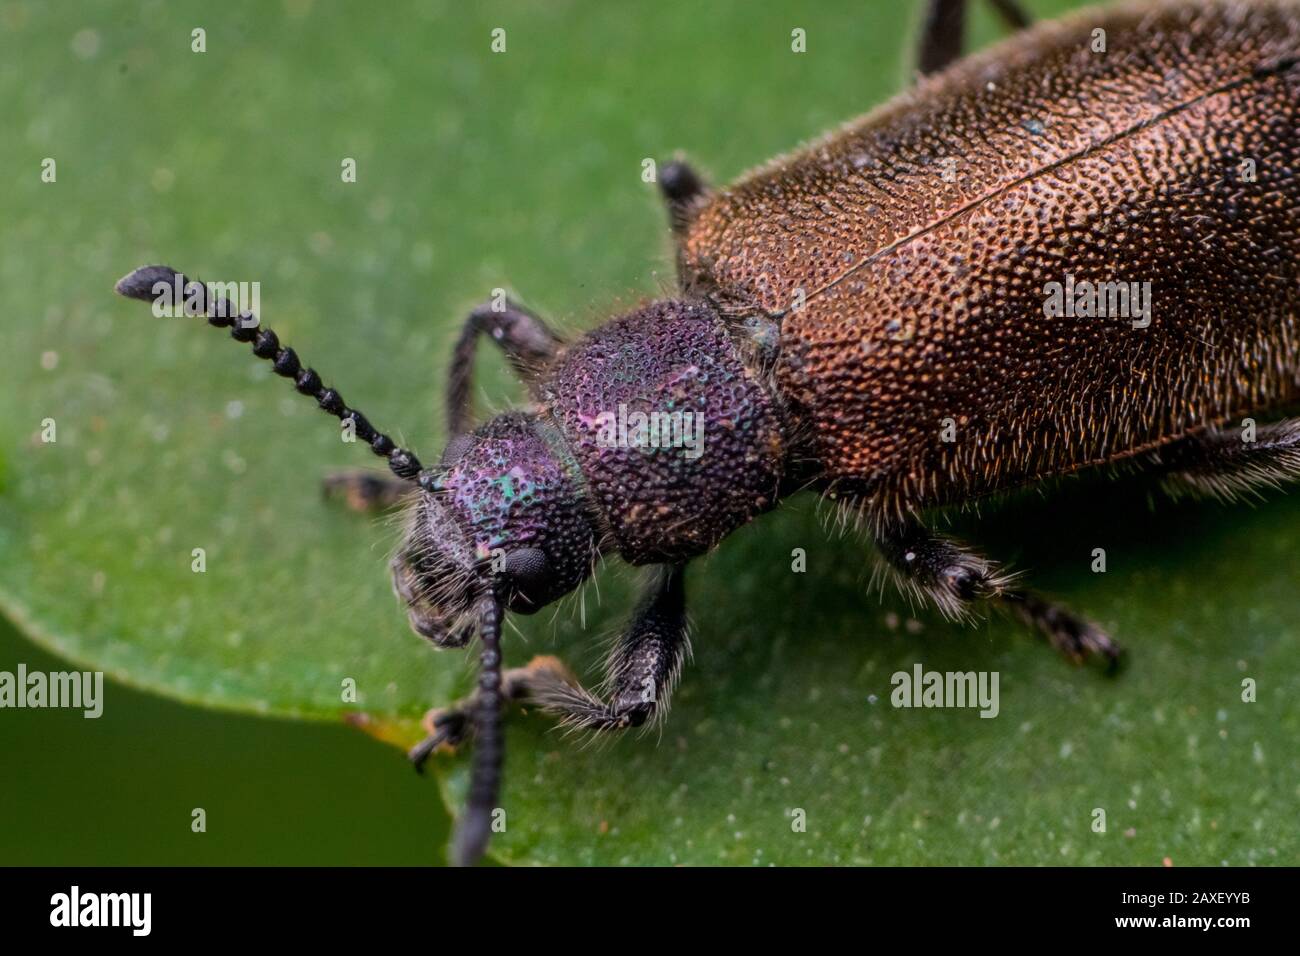 Detailed macro photo of a darkling beetle in a tropical garden Stock Photo